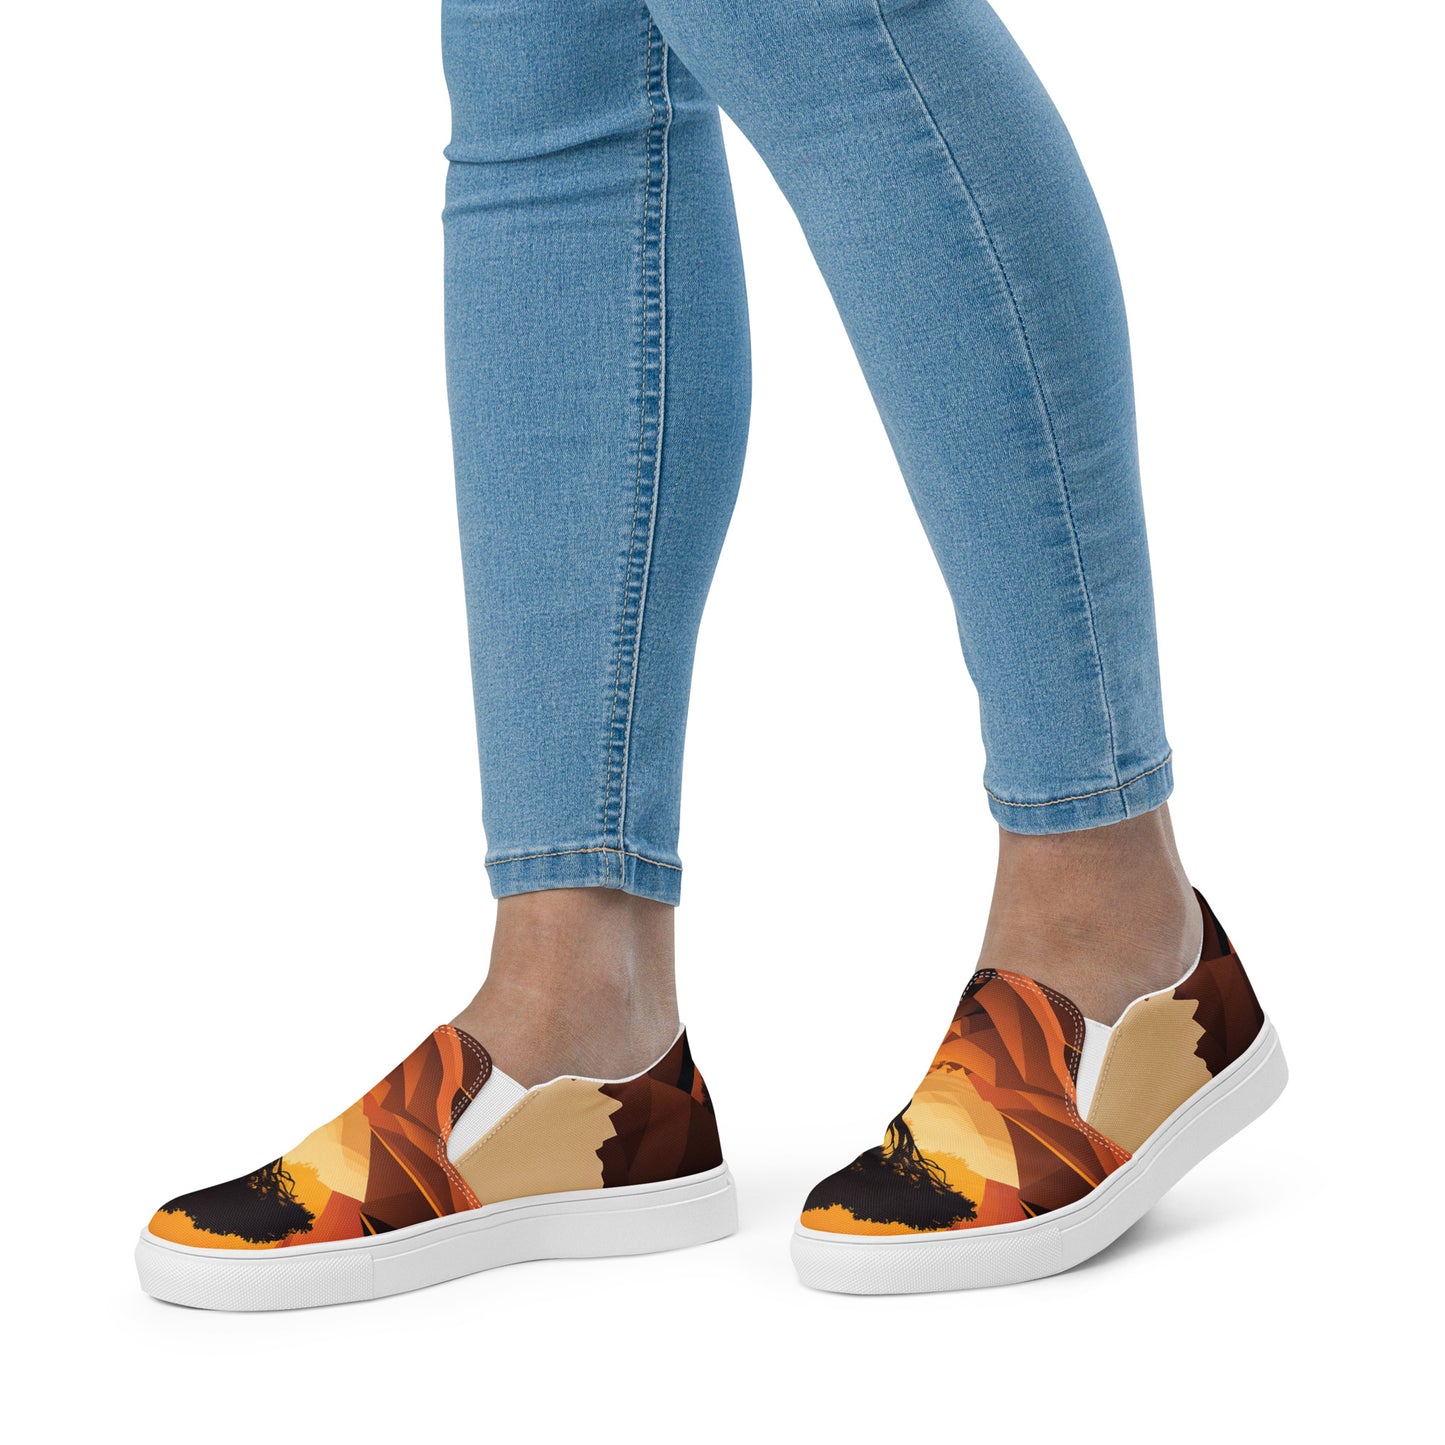 Ethnic design print: Women’s slip-on canvas shoes